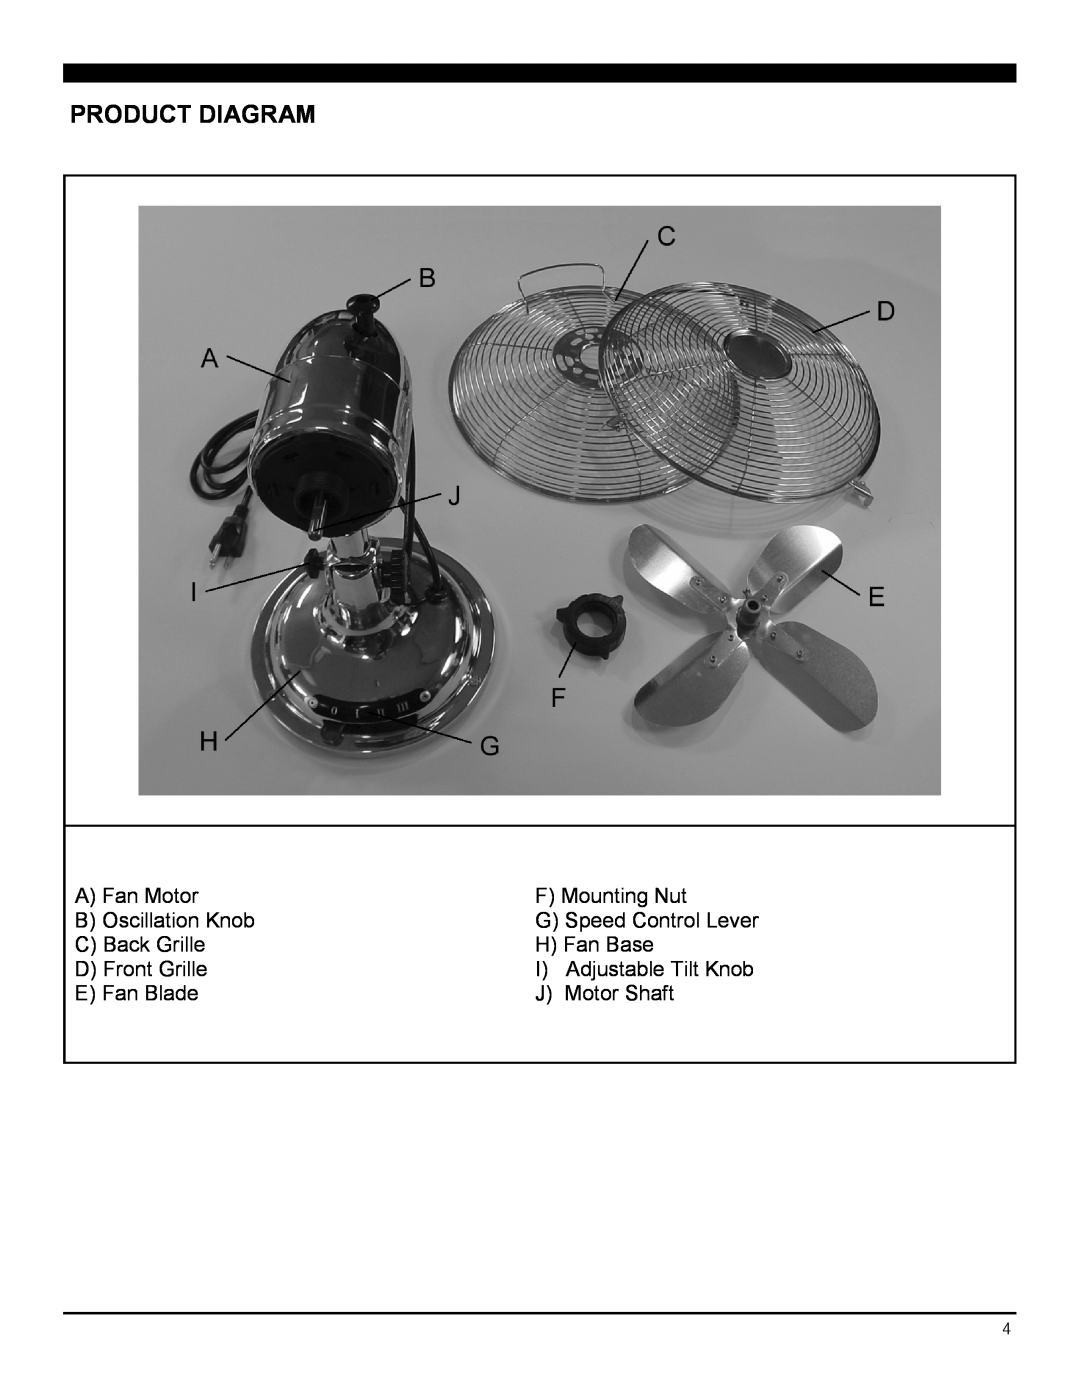 Soleus Air FT1-25-20/21 manual Product Diagram 